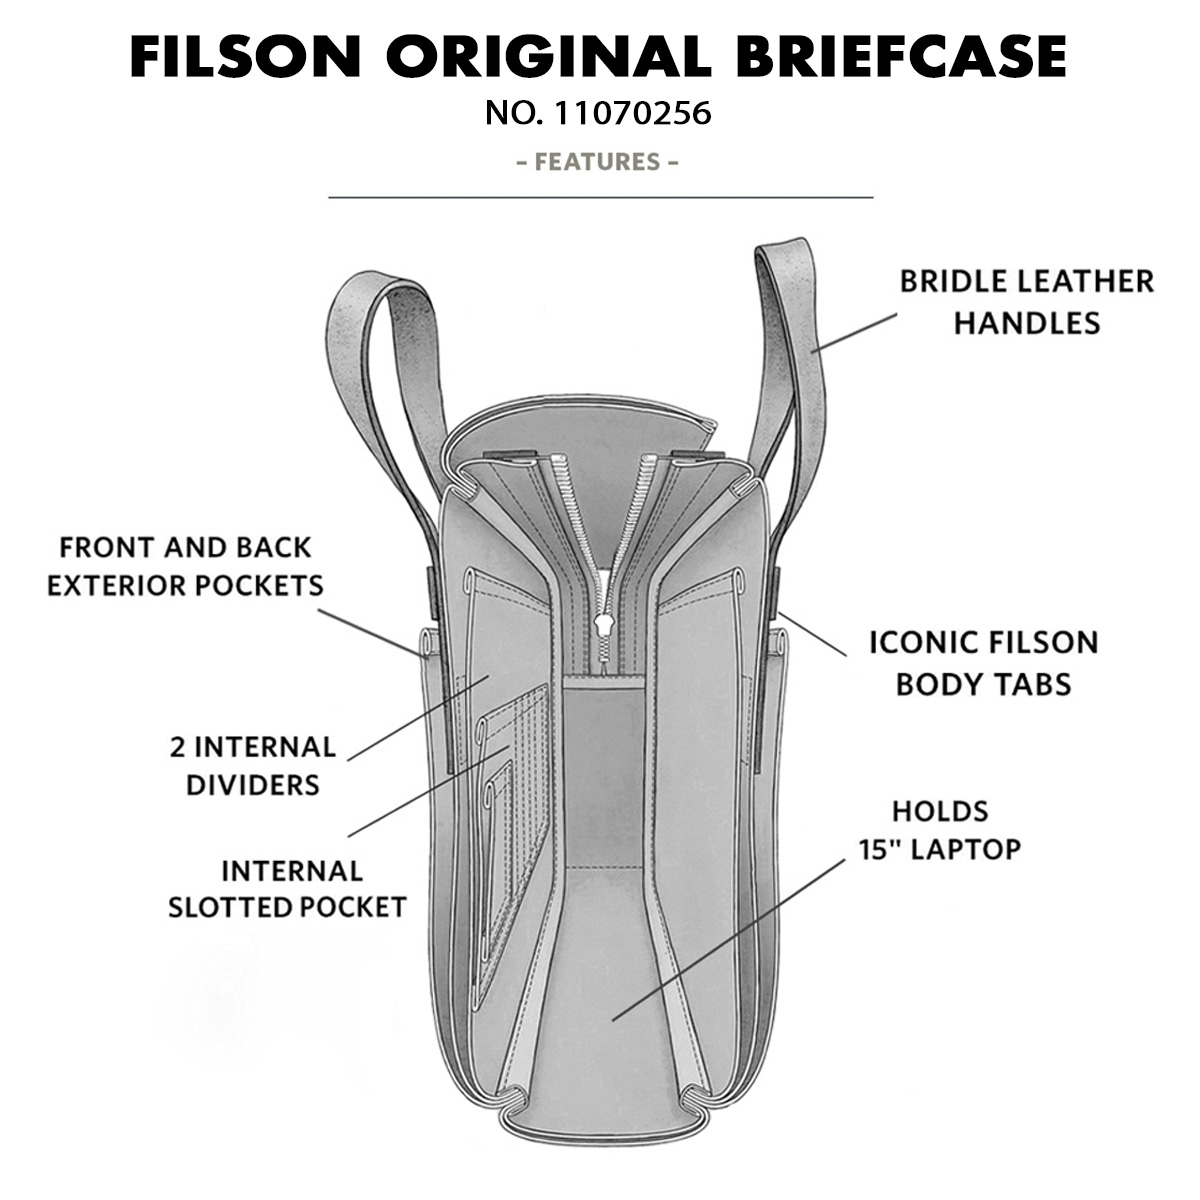 Filson Original Briefcase 11070256, features